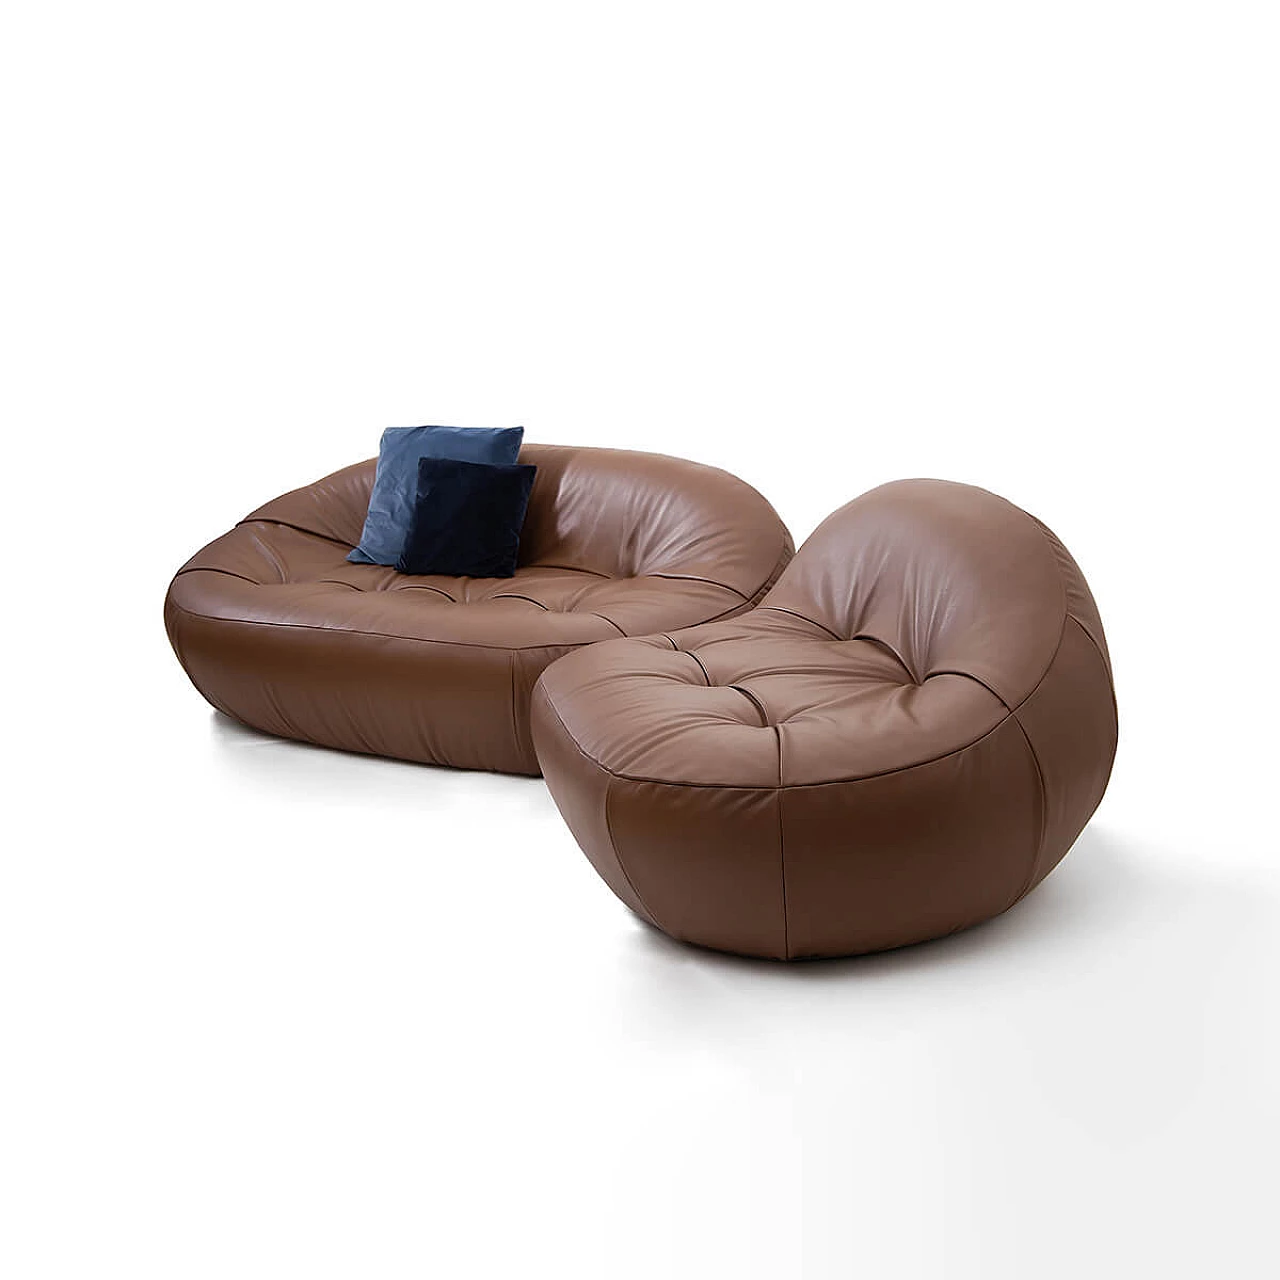 Plumpstones brown capitonné leather sofa by spHaus 2